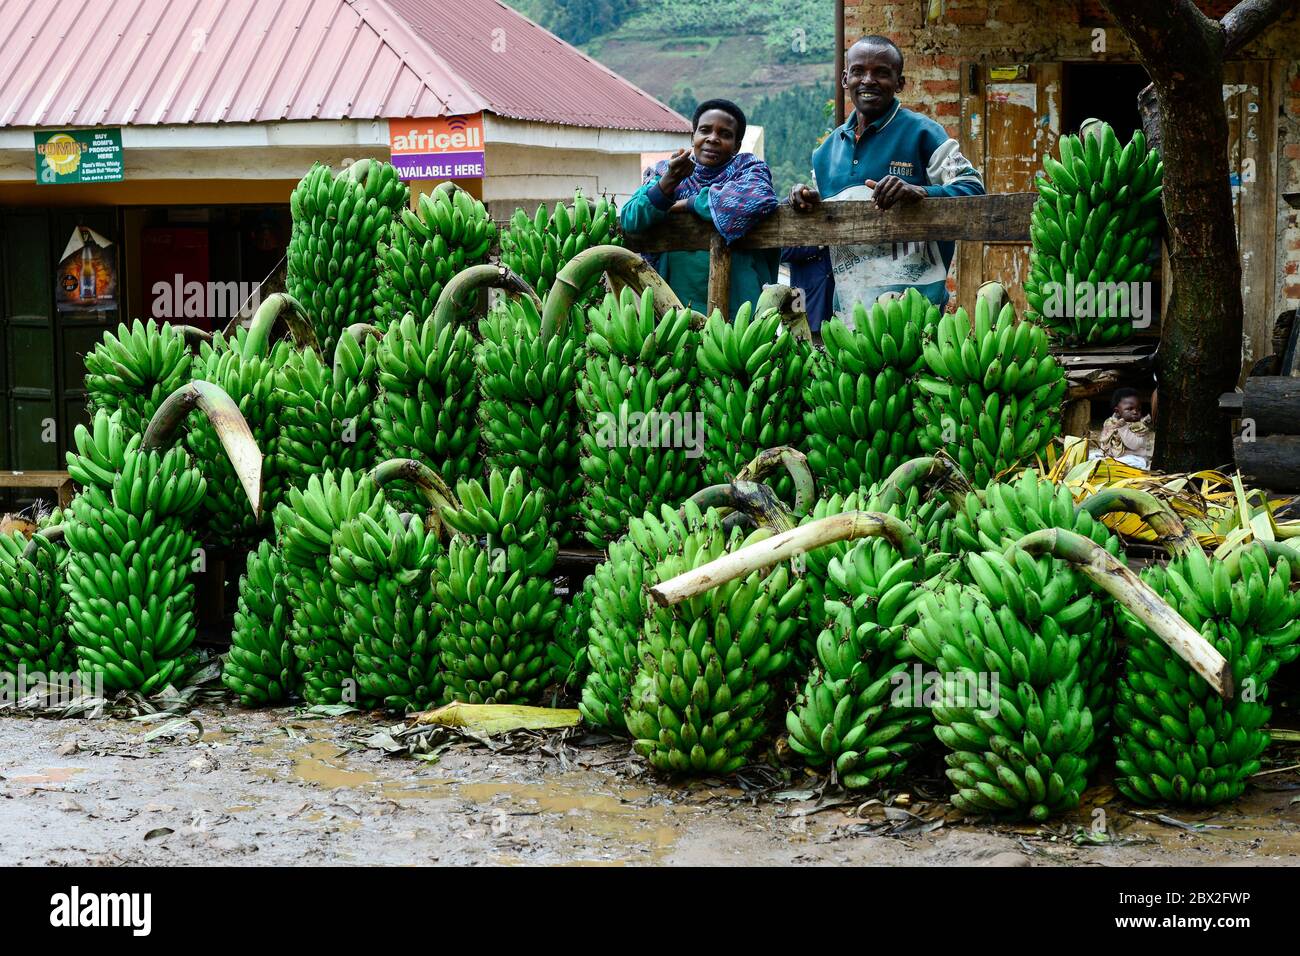 UGANDA, Kasese, street sale of banana in village along the road Stock Photo